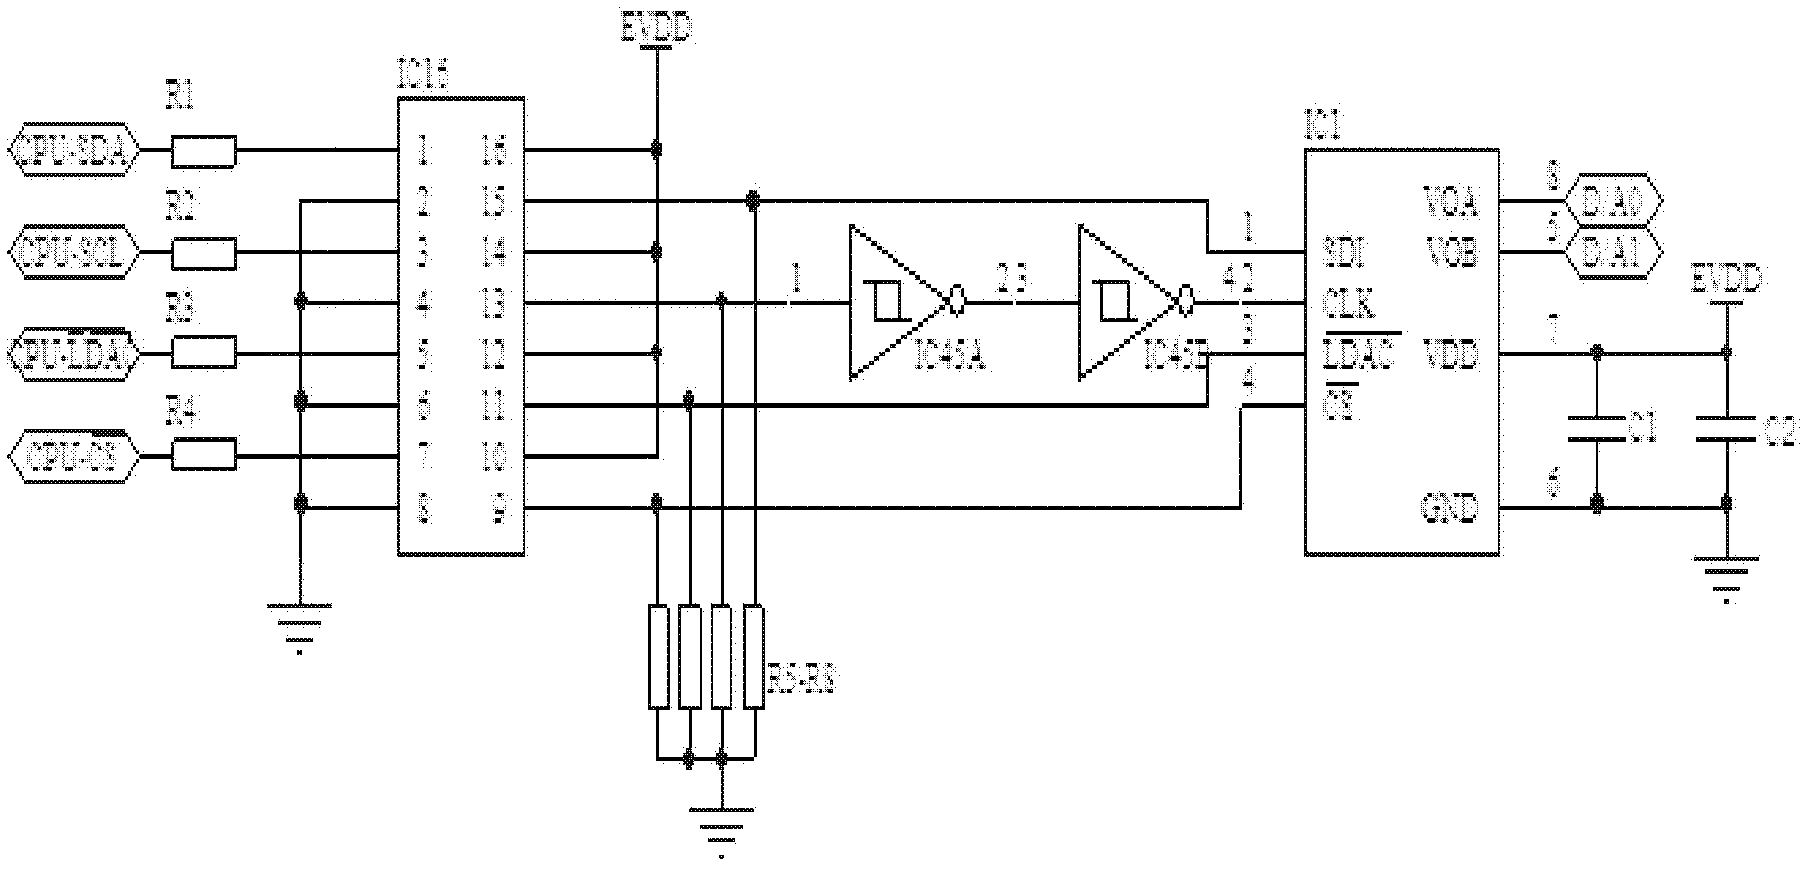 Digital-to-analog converter